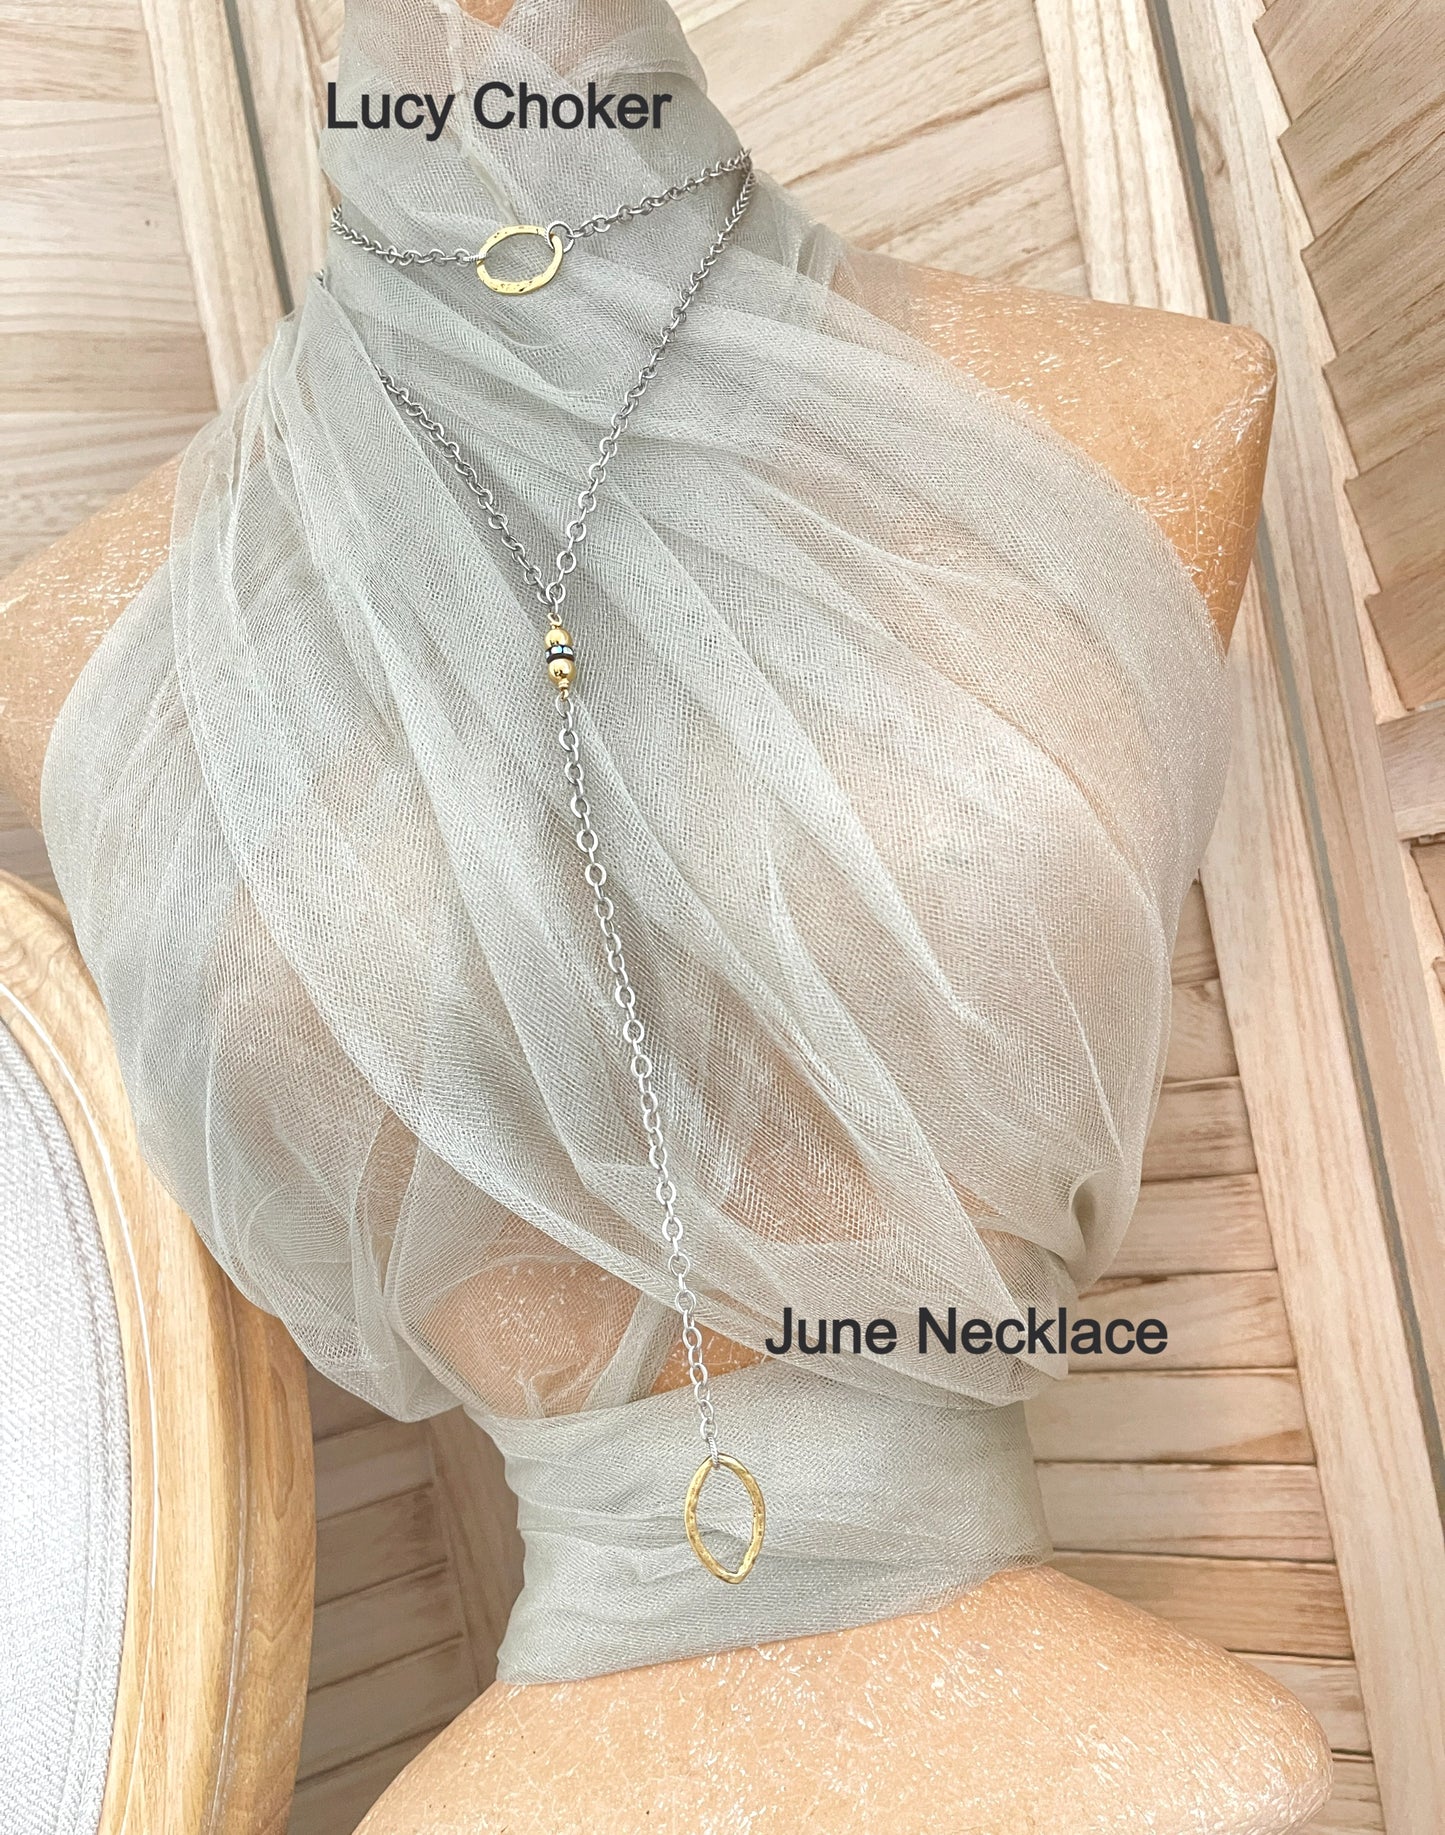 June Necklace